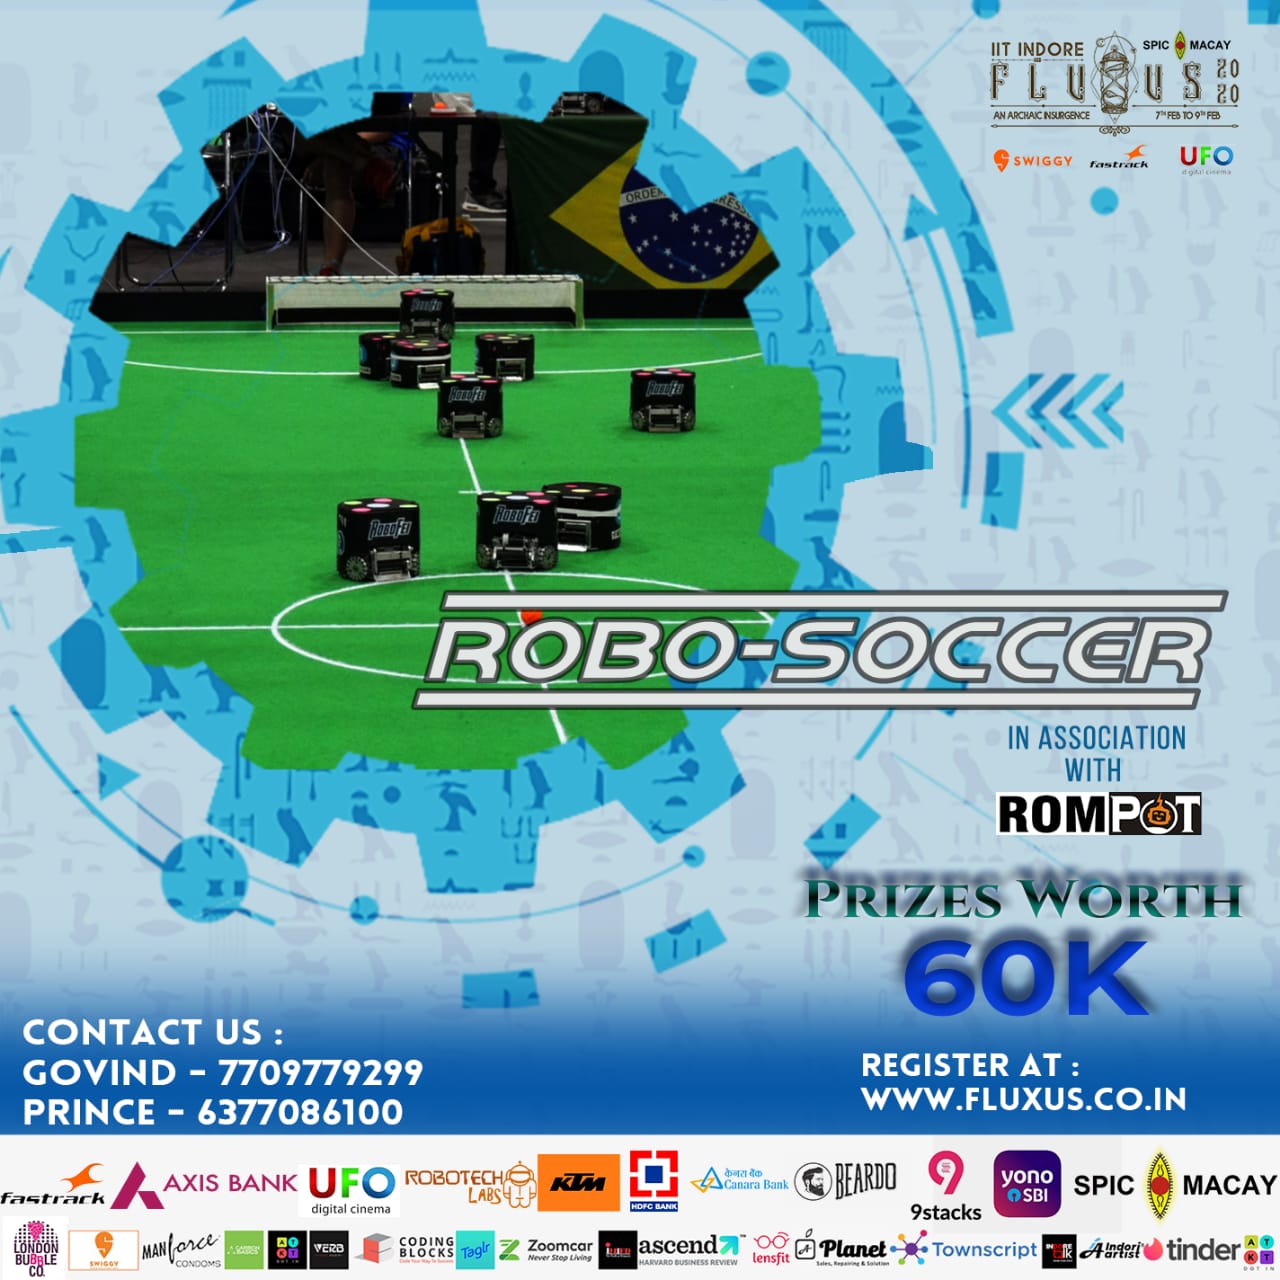 Robo-Soccer IIT INDORE 2020